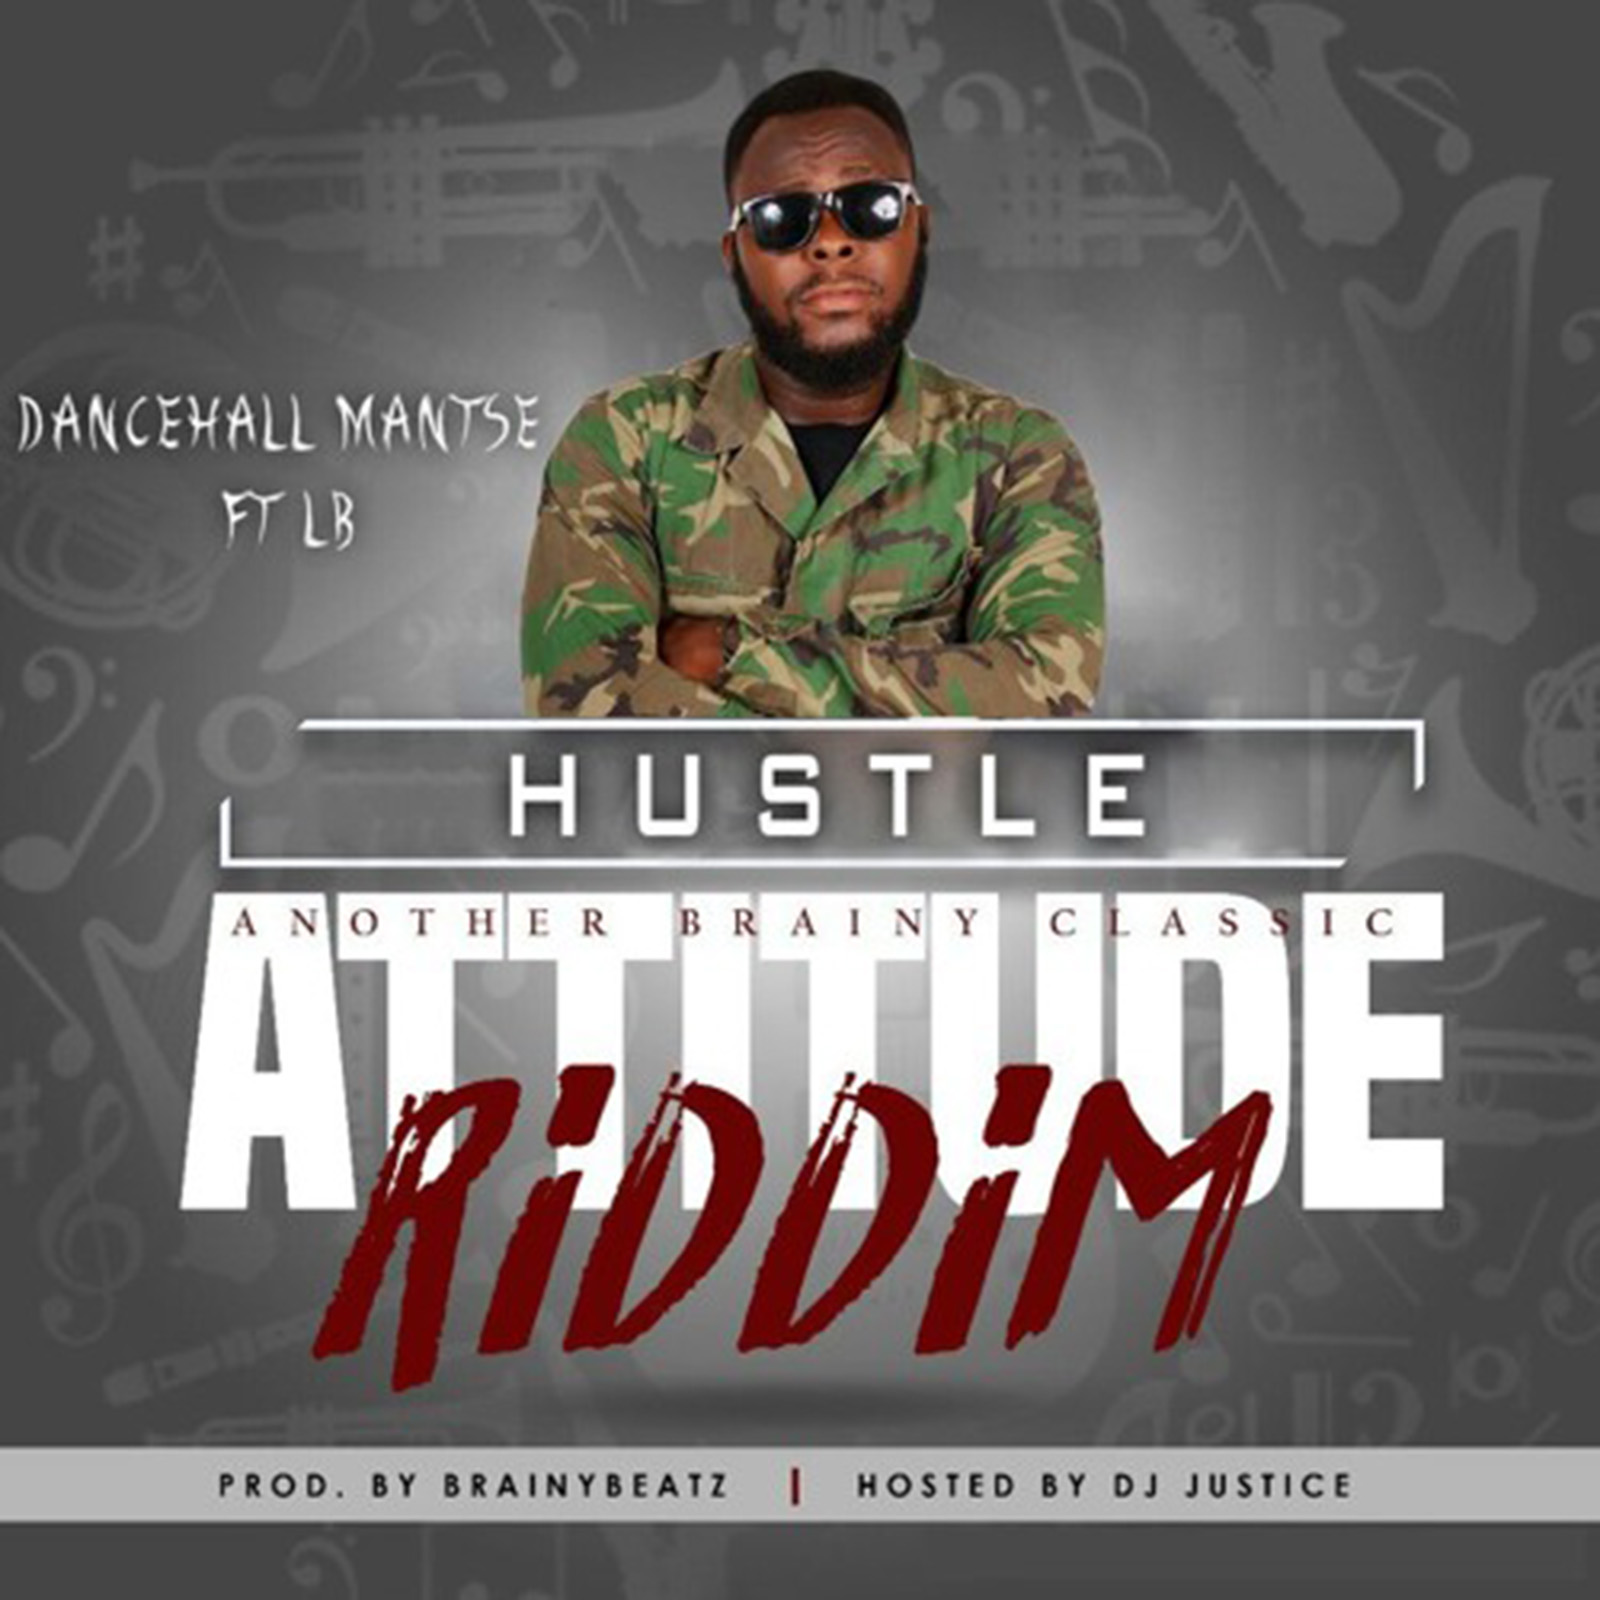 Hustle (Attitude Riddim) by Dancehall Mantse feat. LB